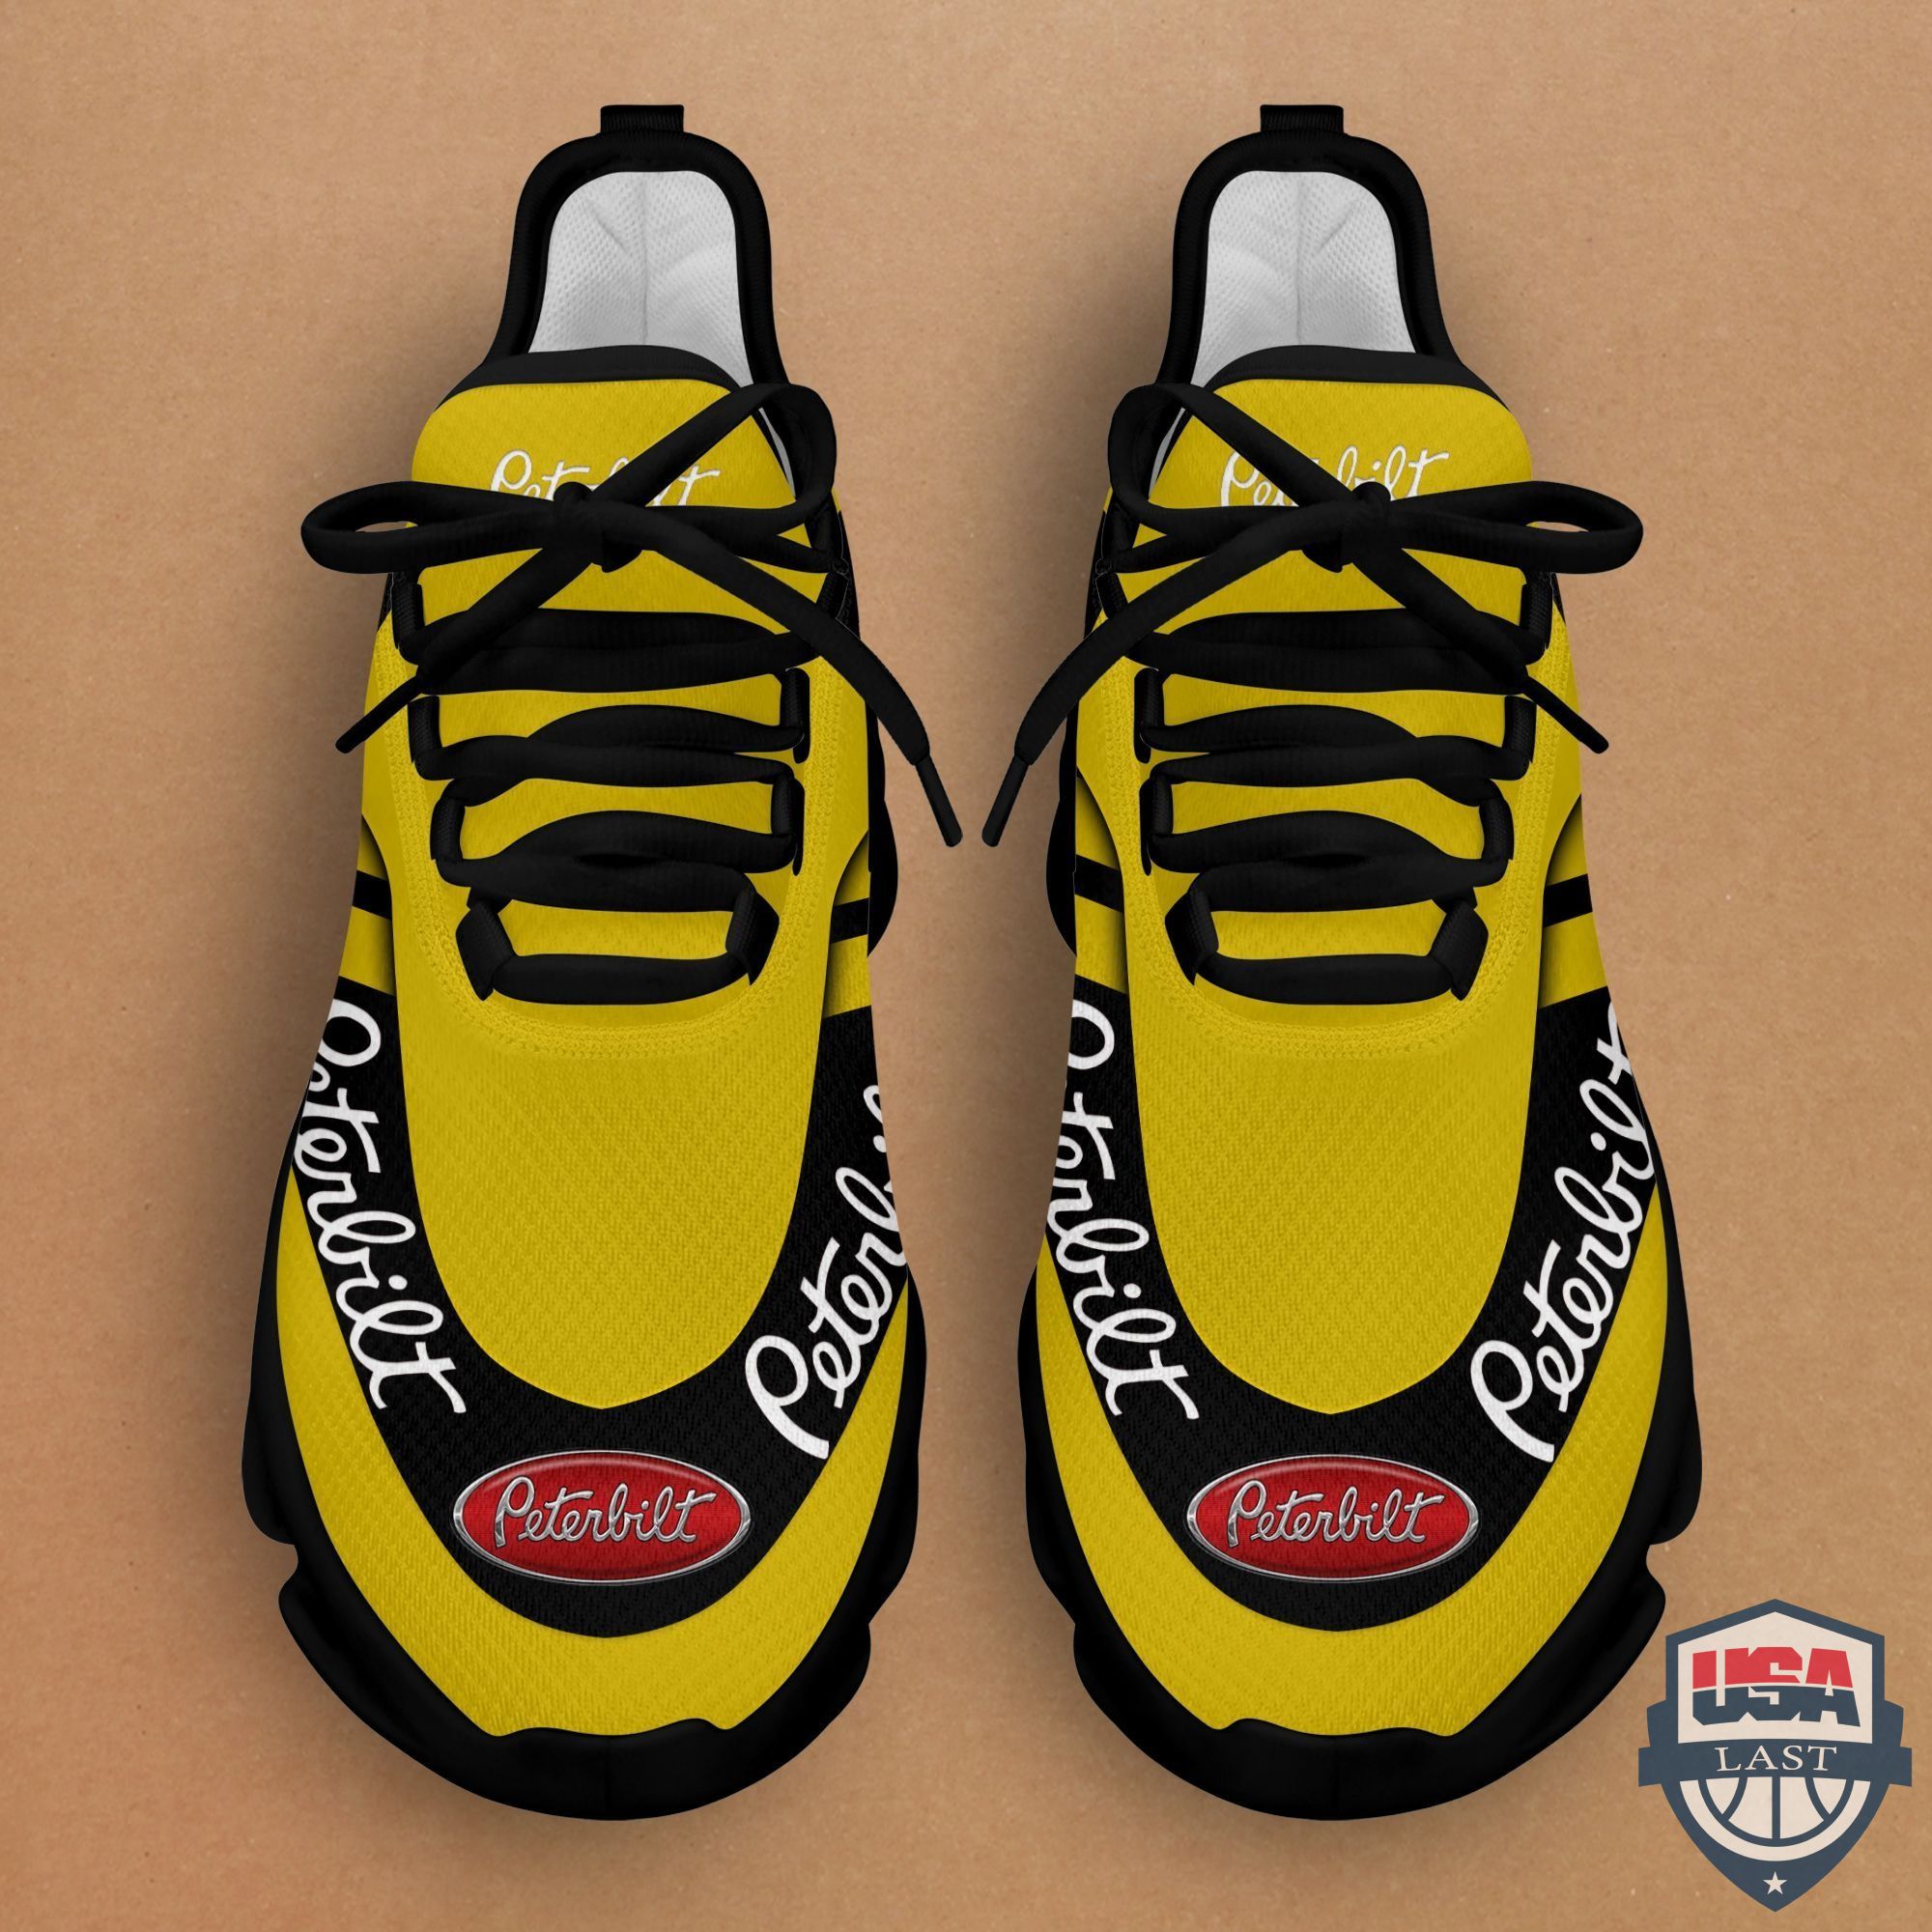 Peterbilt Motors Company Running Shoes Yellow Version